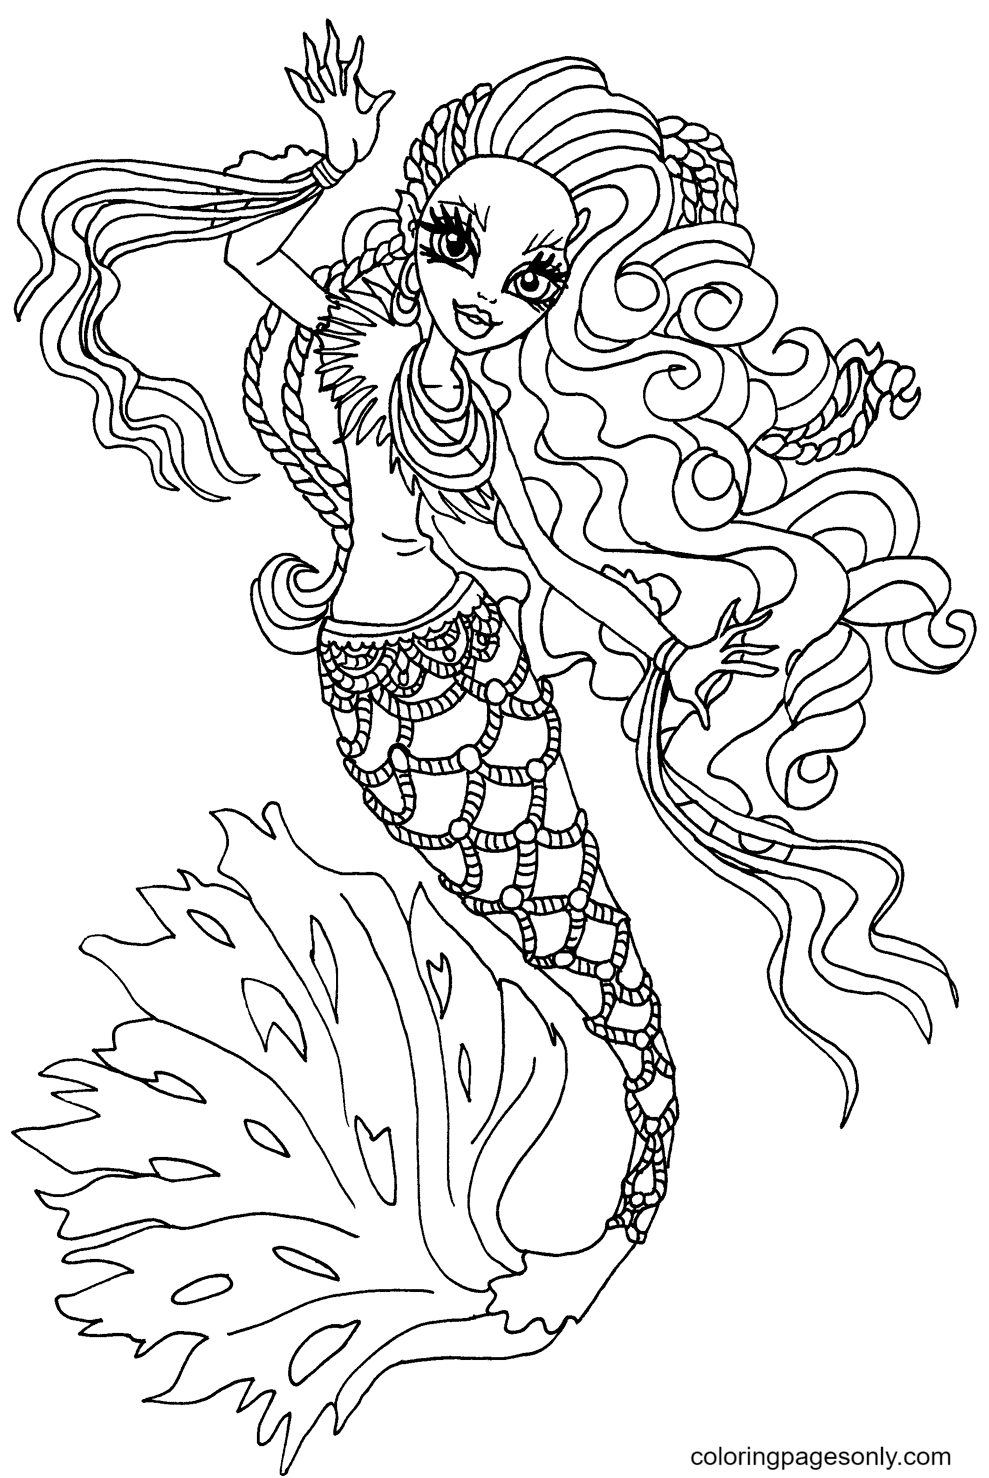 Sirena Von Boo Coloring Page